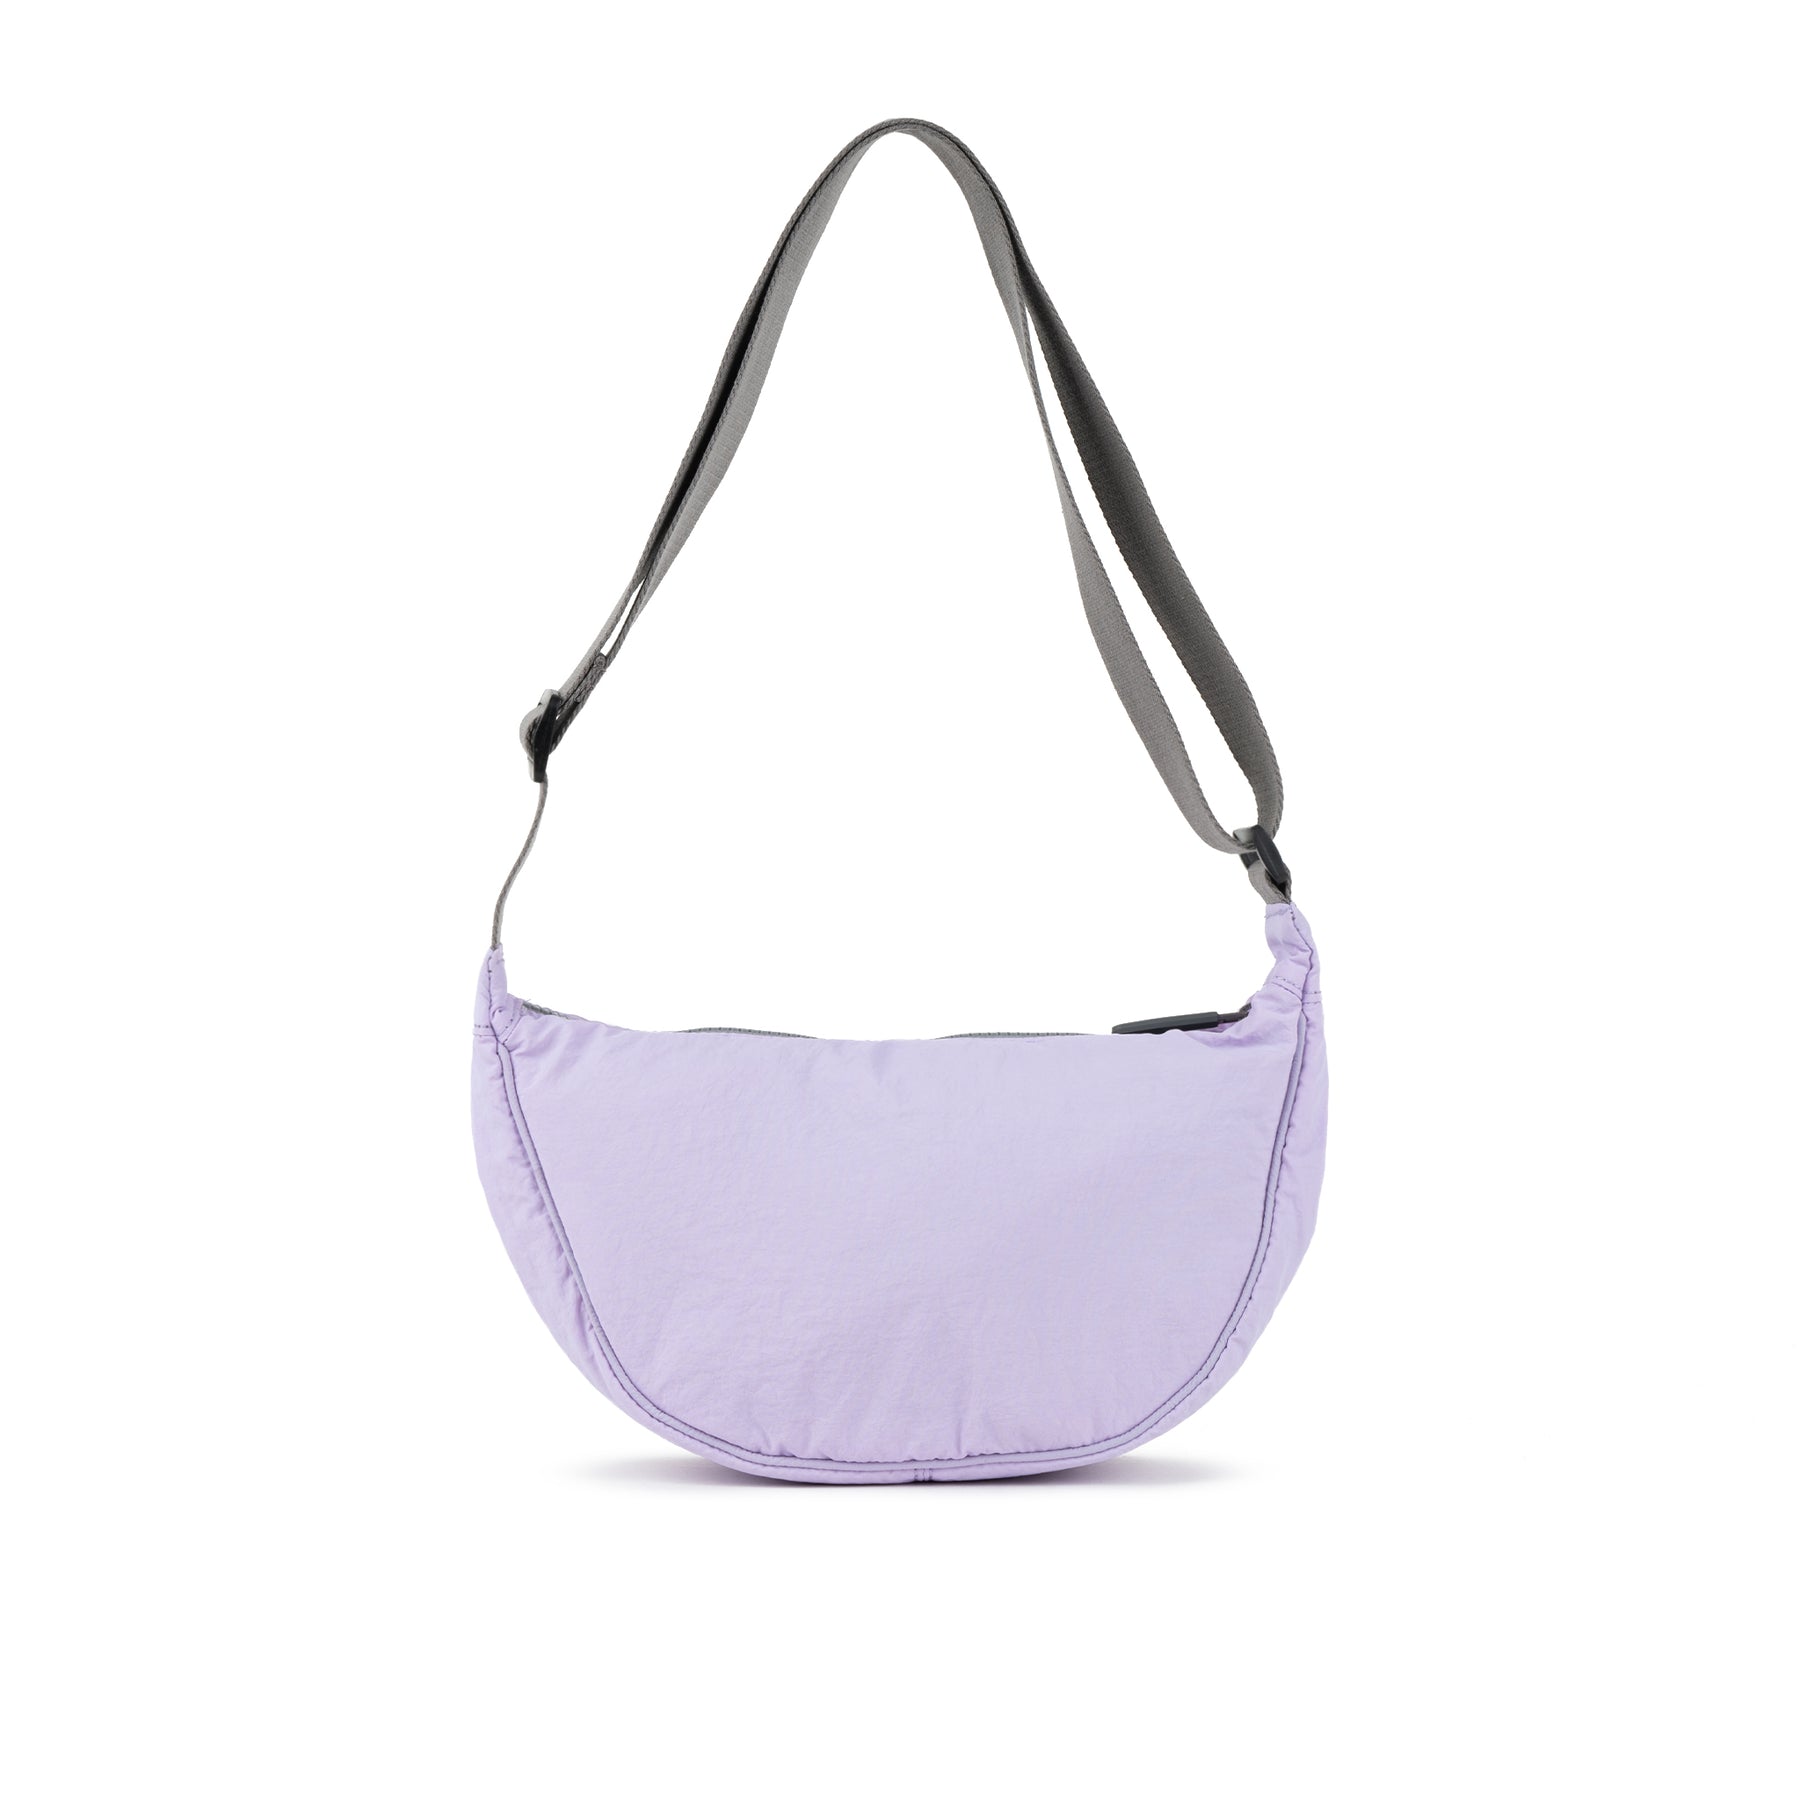 ROKA Farringdon Lavender Recycled Taslon Bag - OS